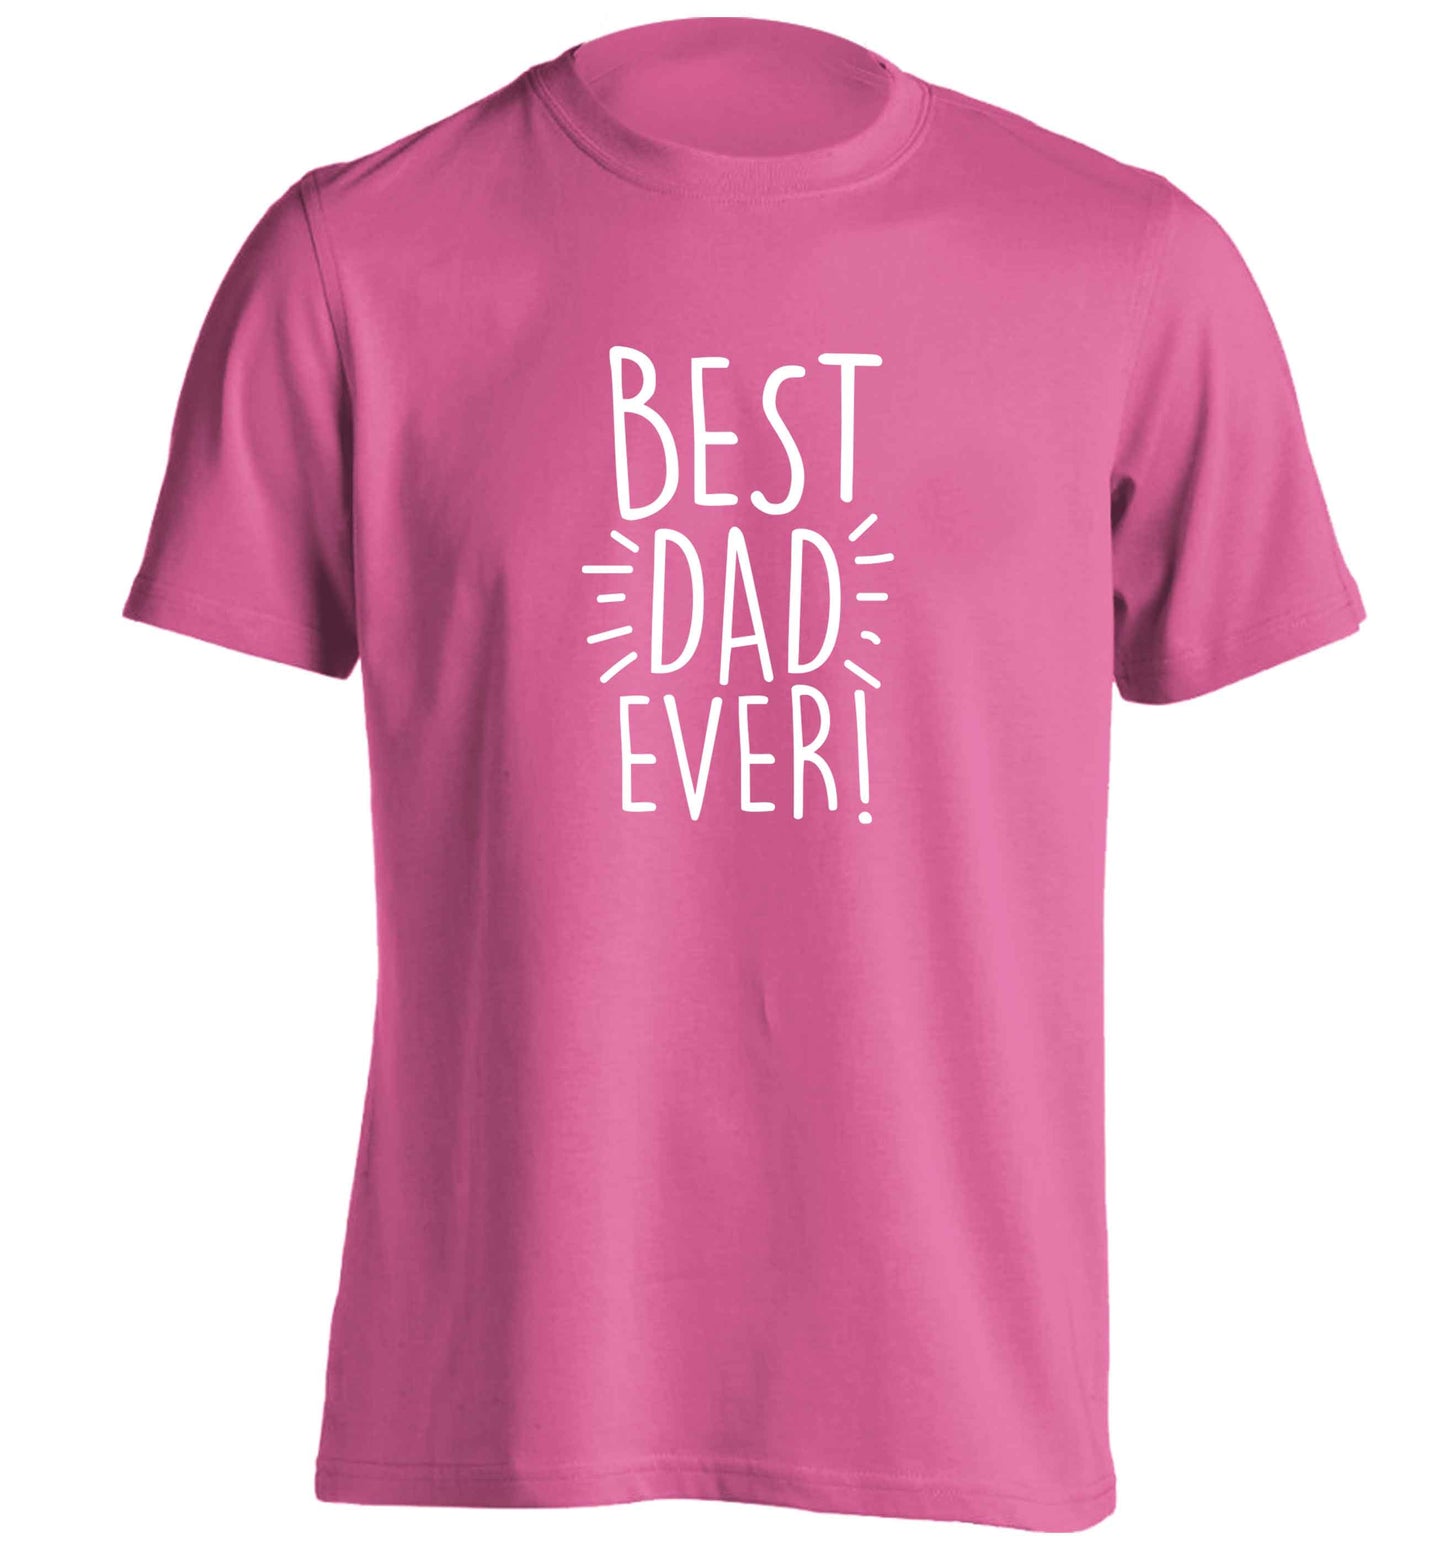 Best dad ever! adults unisex pink Tshirt 2XL